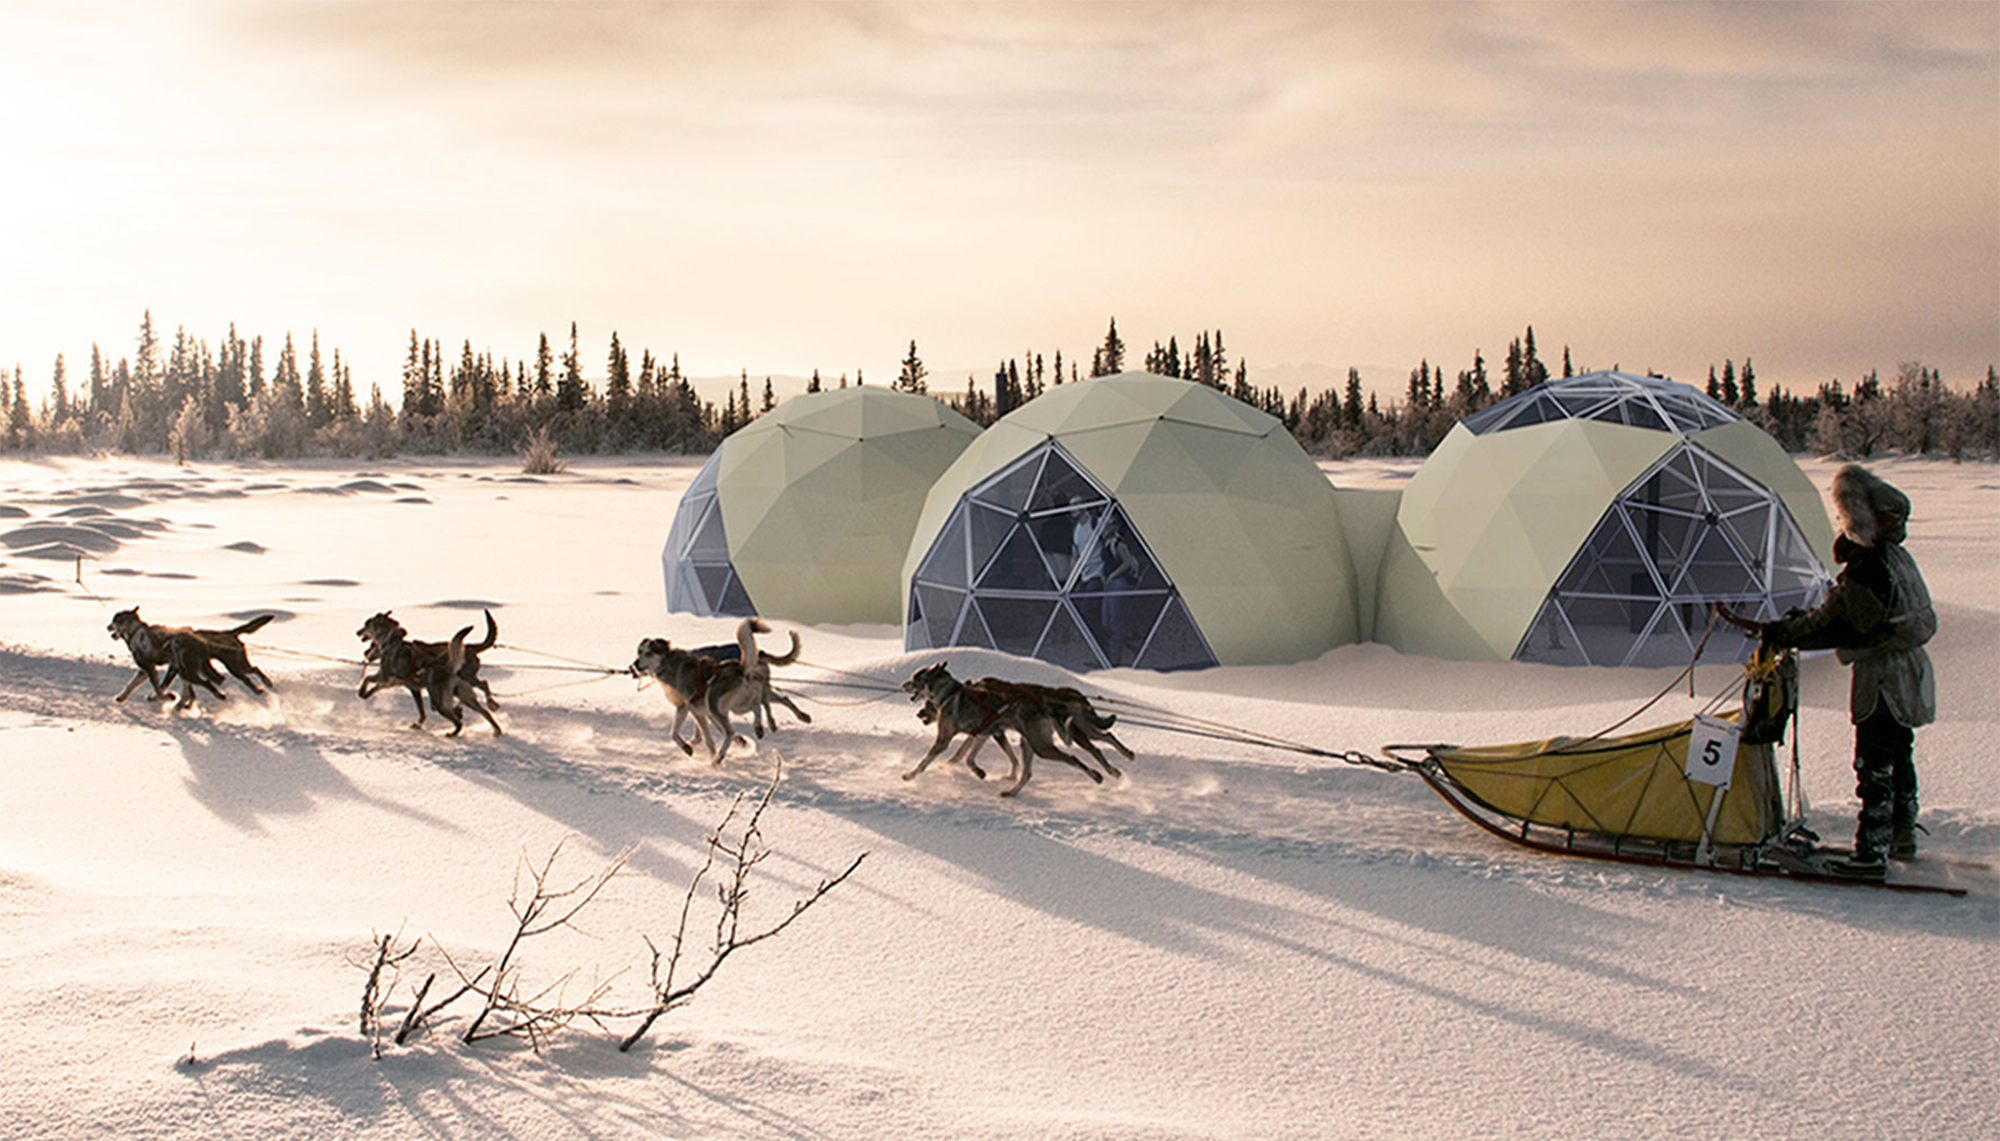 Arctic Dome hundekjøring